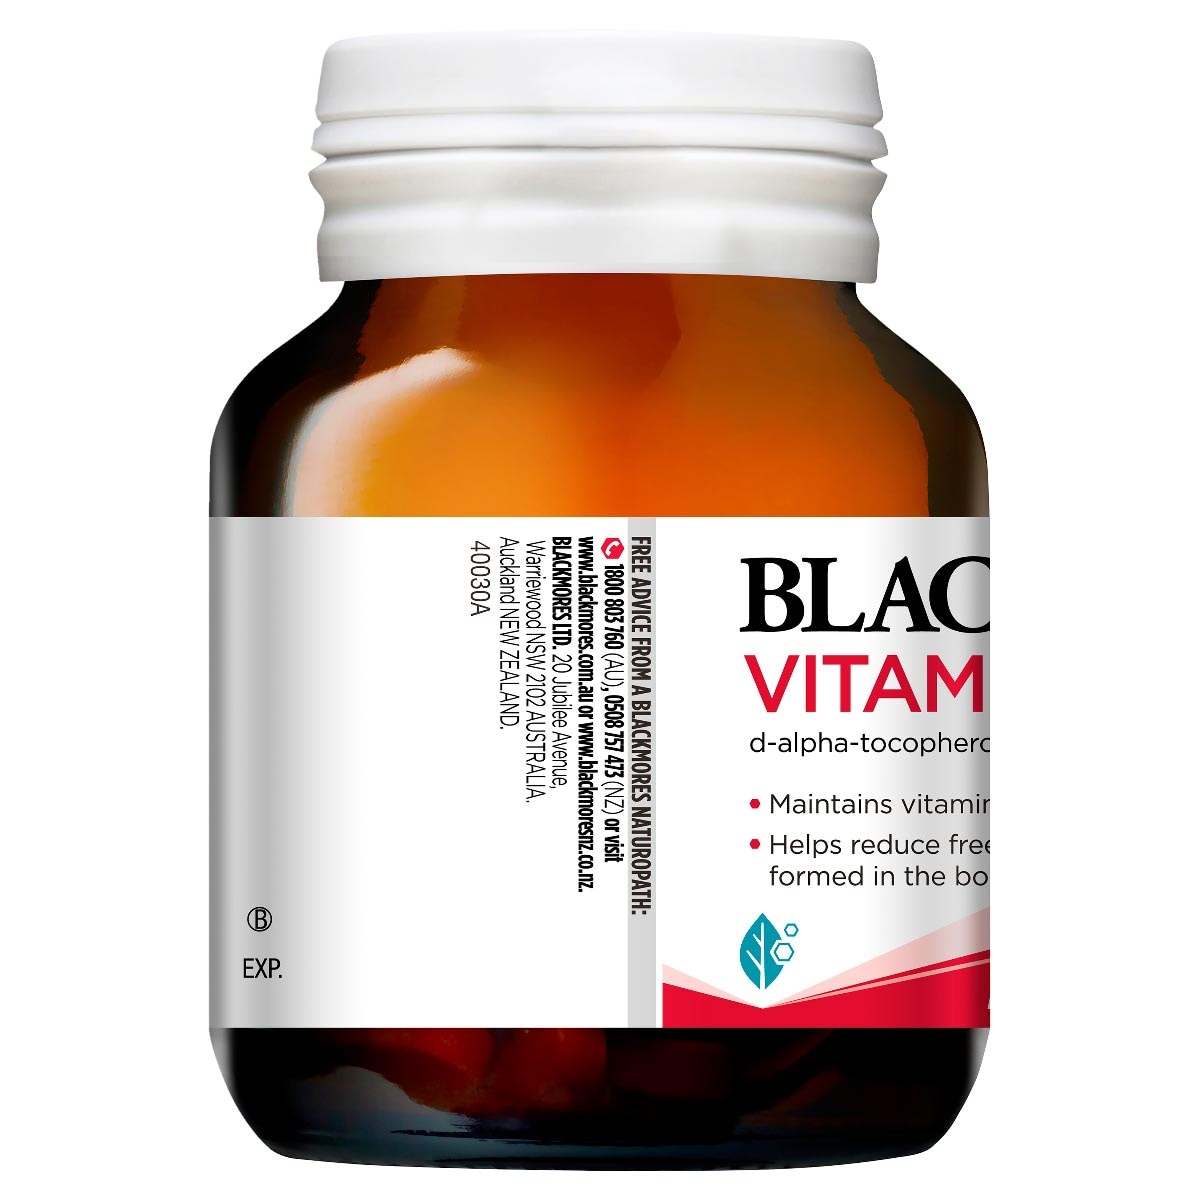 Blackmores Vitamin E 250IU 50 Capsules